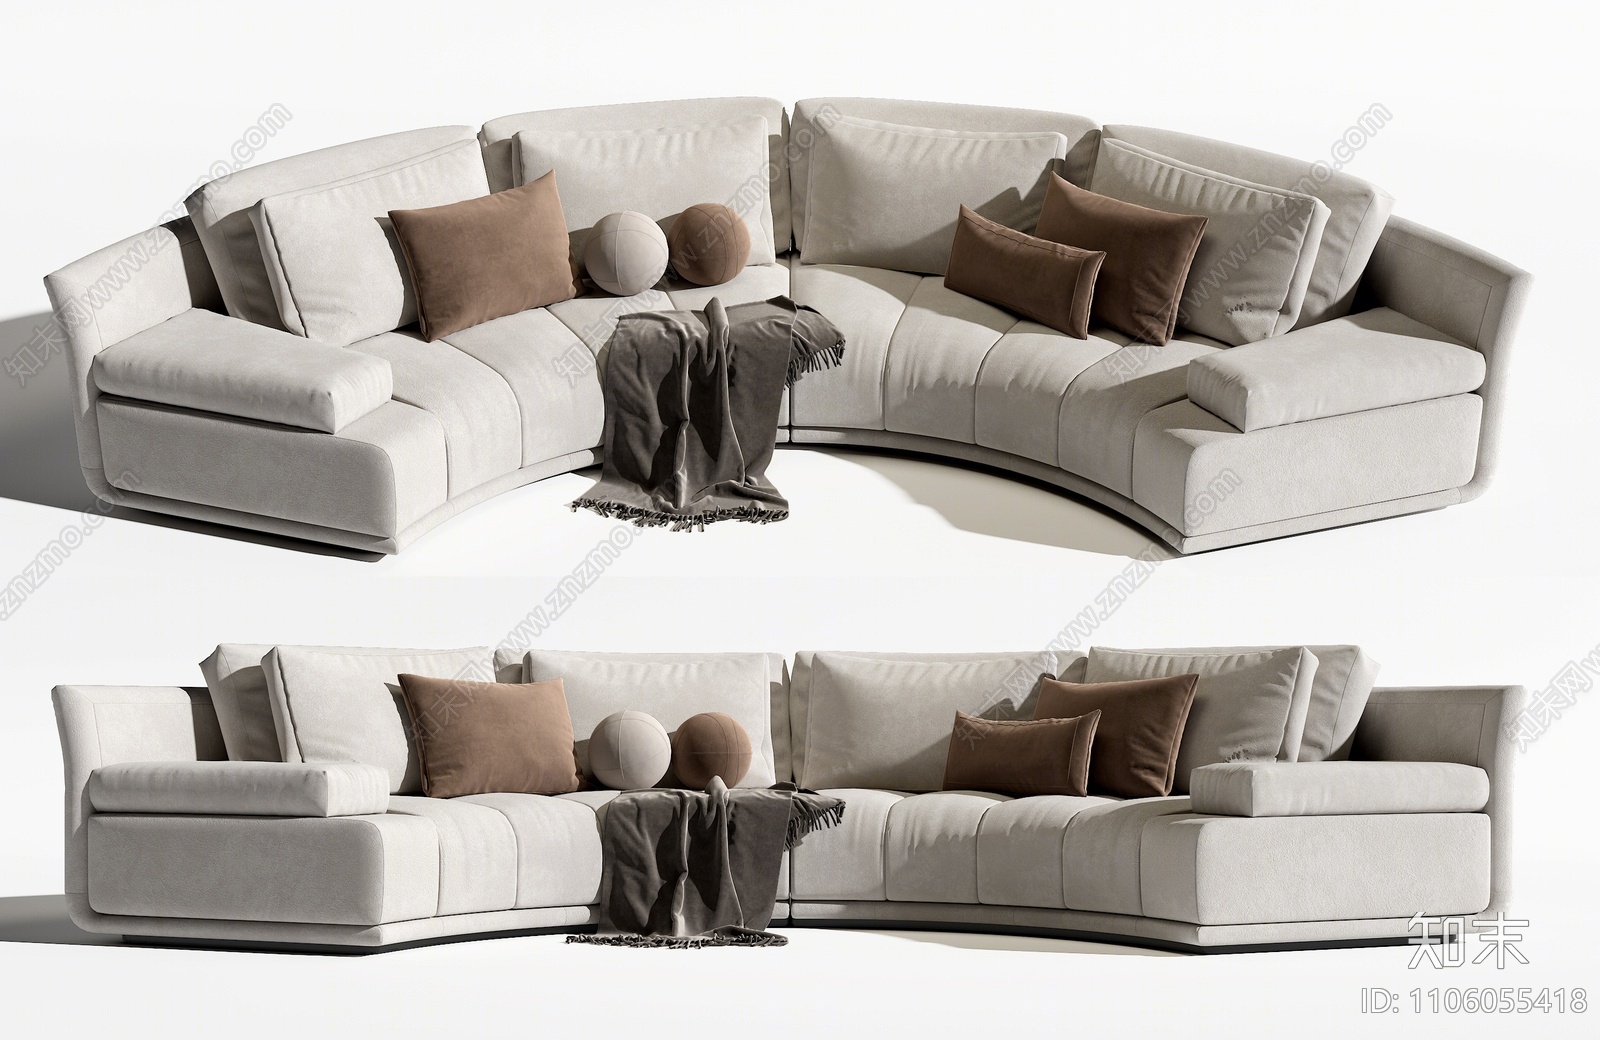 Fendi现代异形沙发3D模型下载【ID:1106055418】